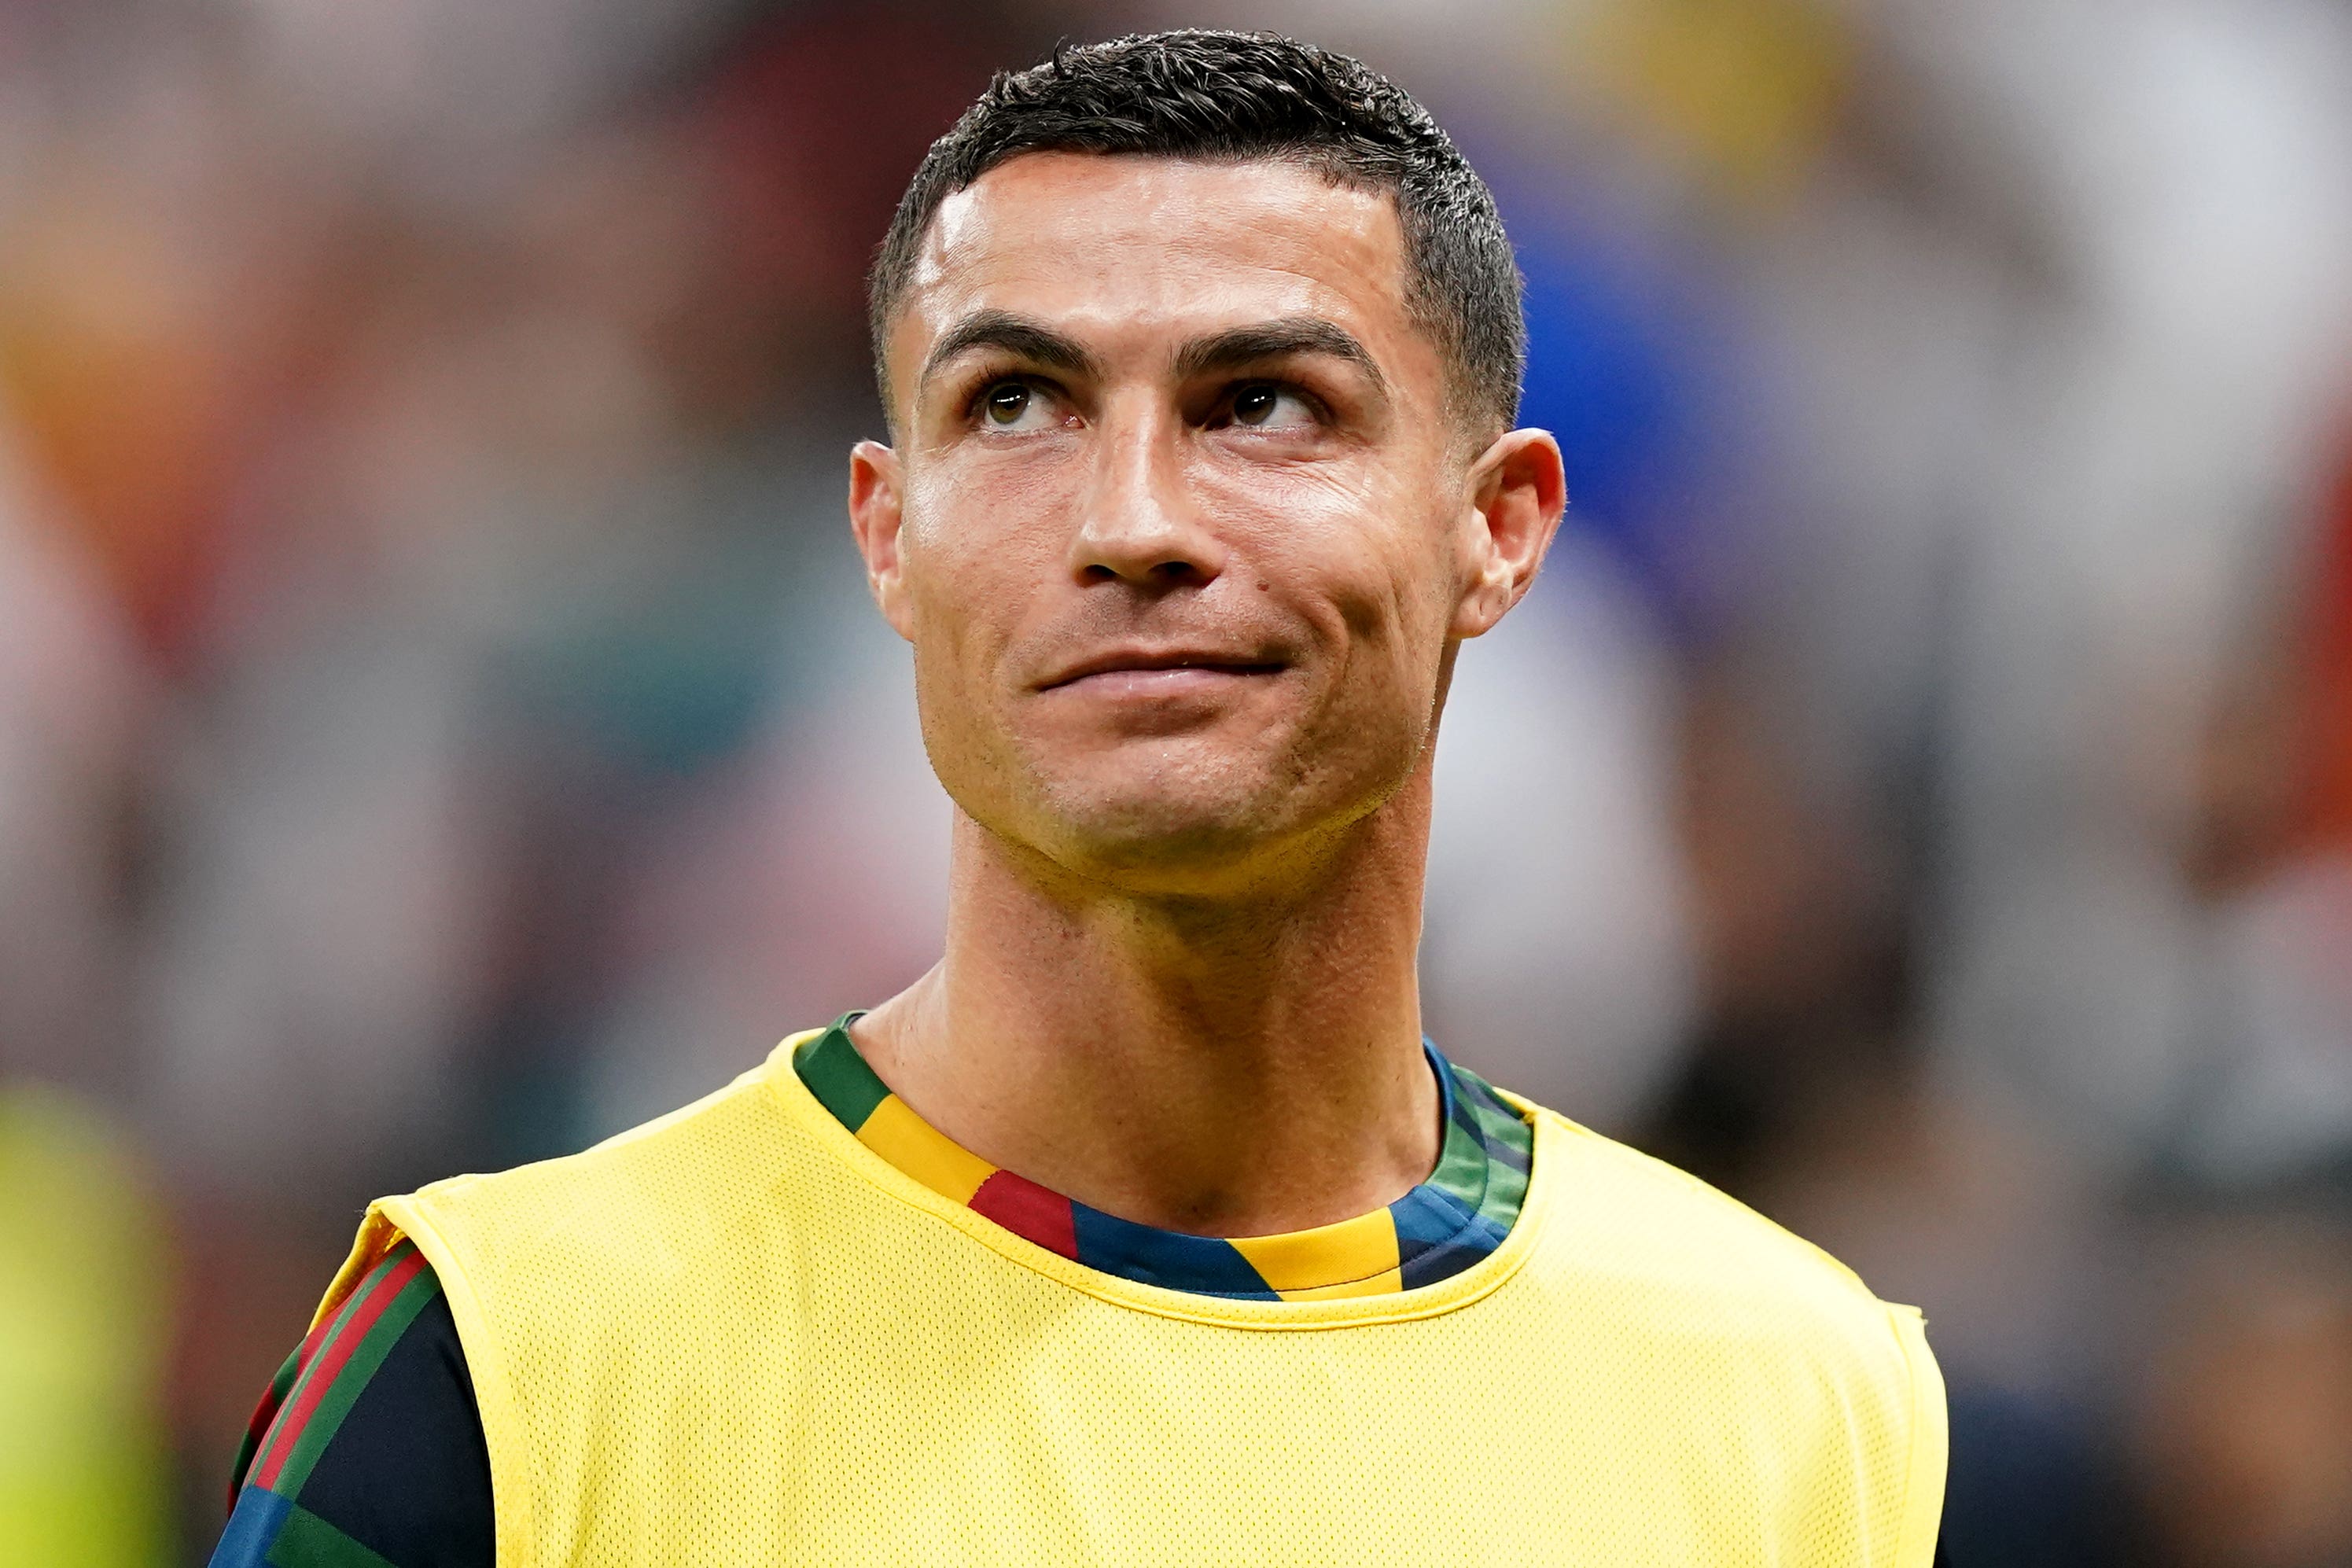 cristiano ronaldo tiktok: Cristiano Ronaldo's TikTok account banned? What  we know so far - The Economic Times